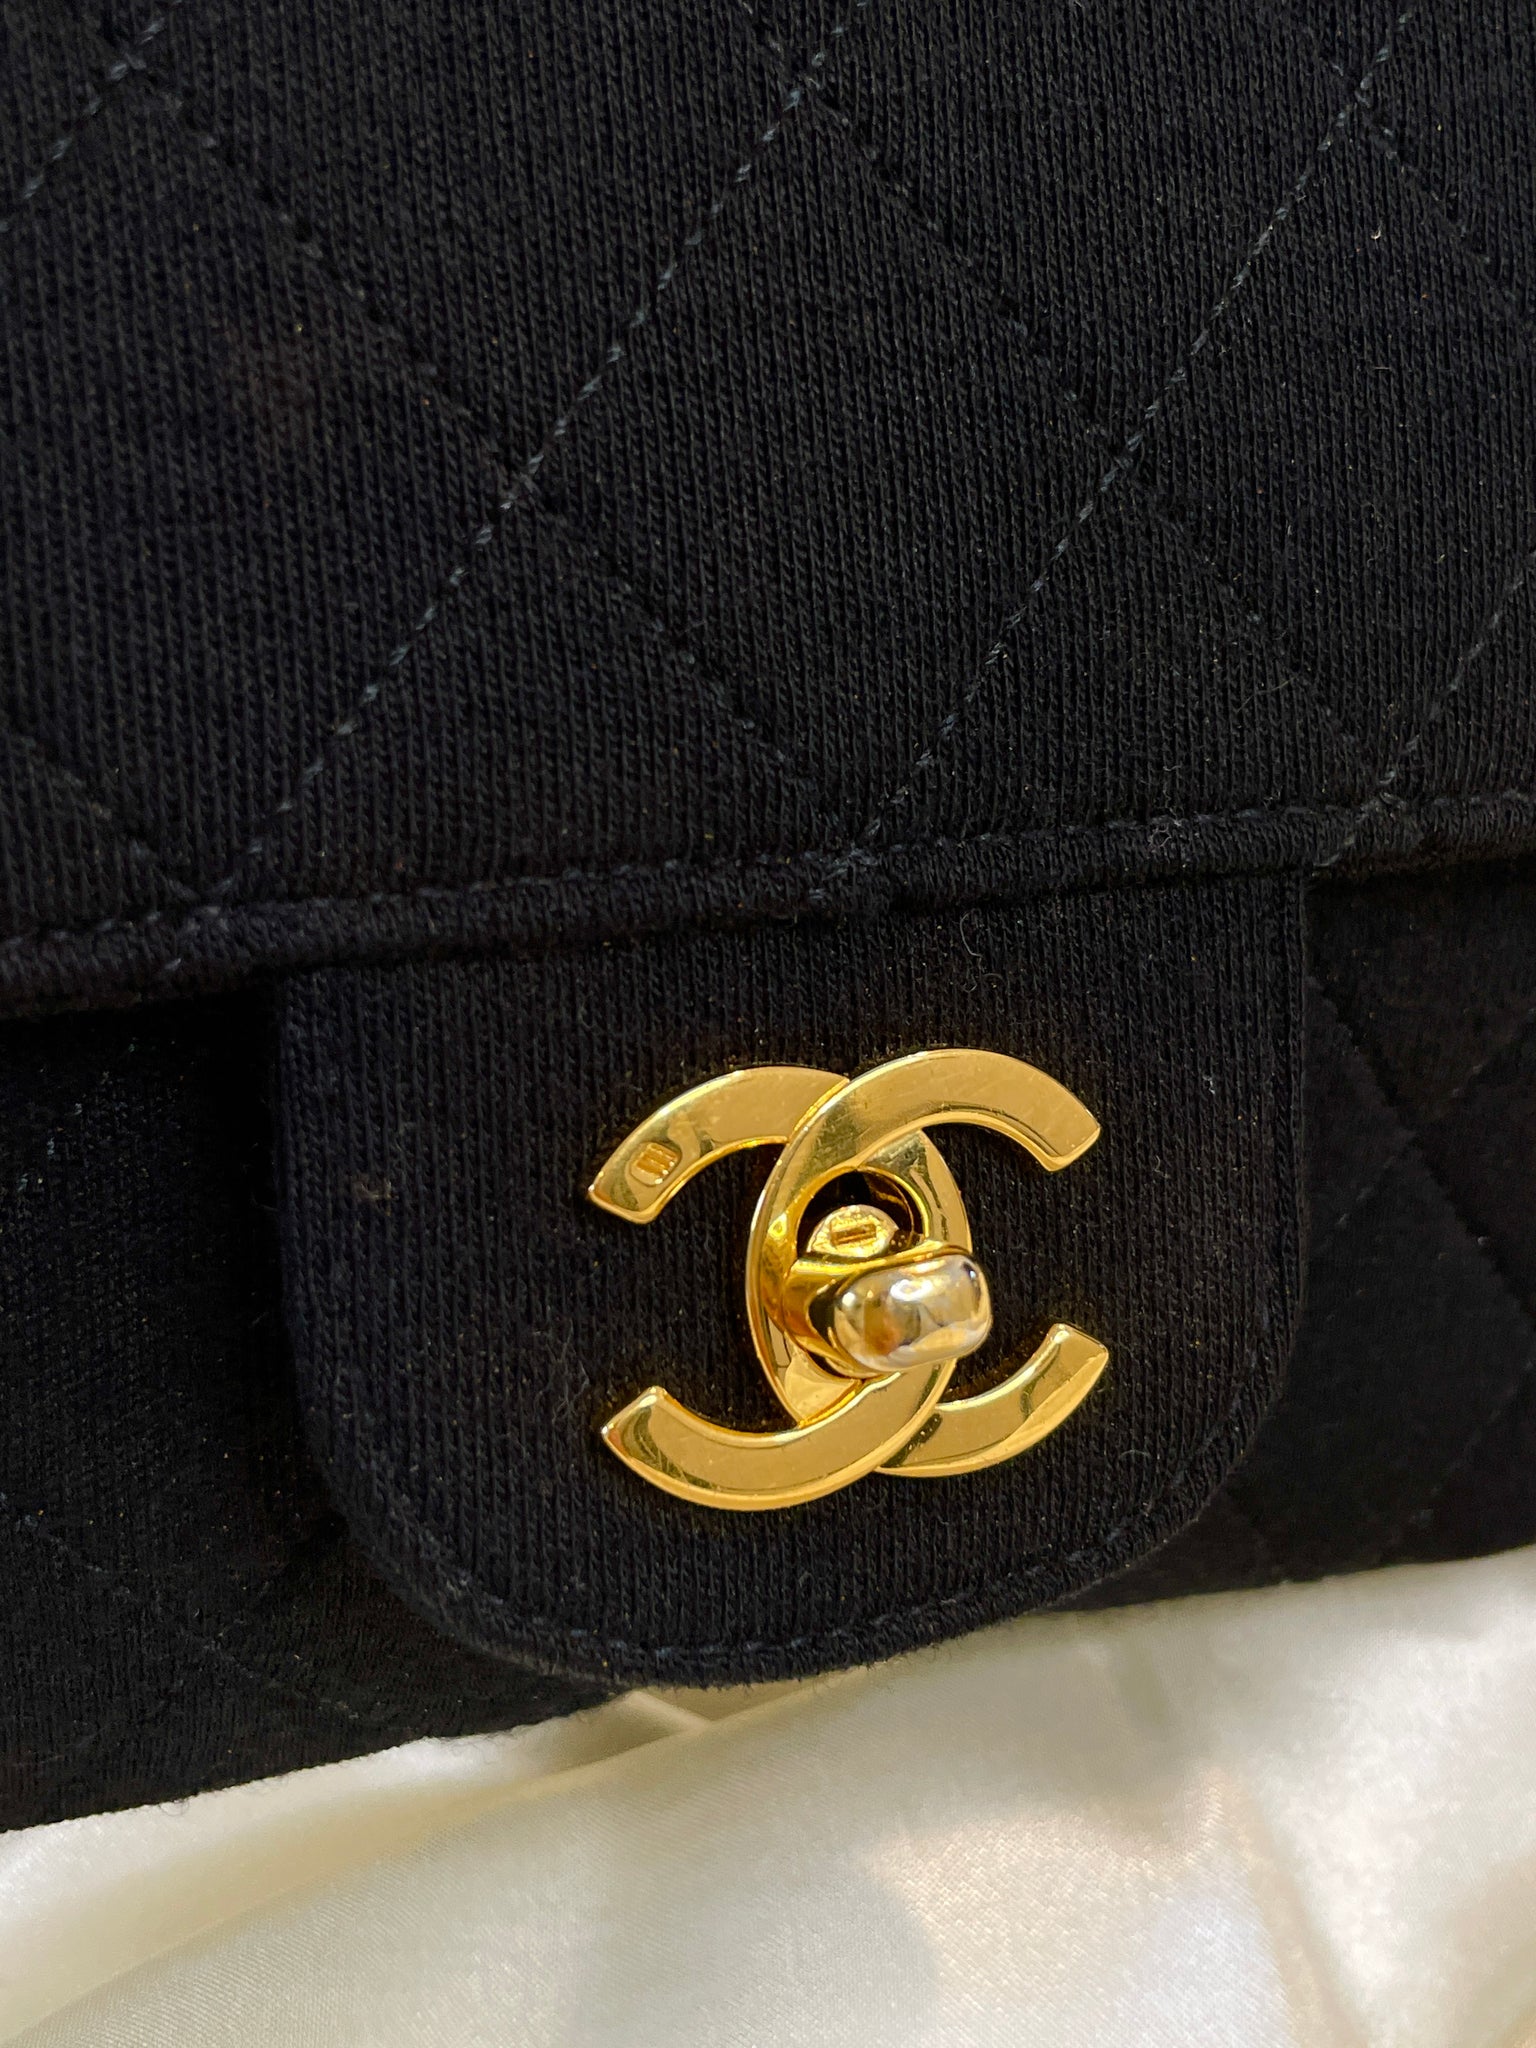 Rare Chanel Jersey Medium Double Flap Bag